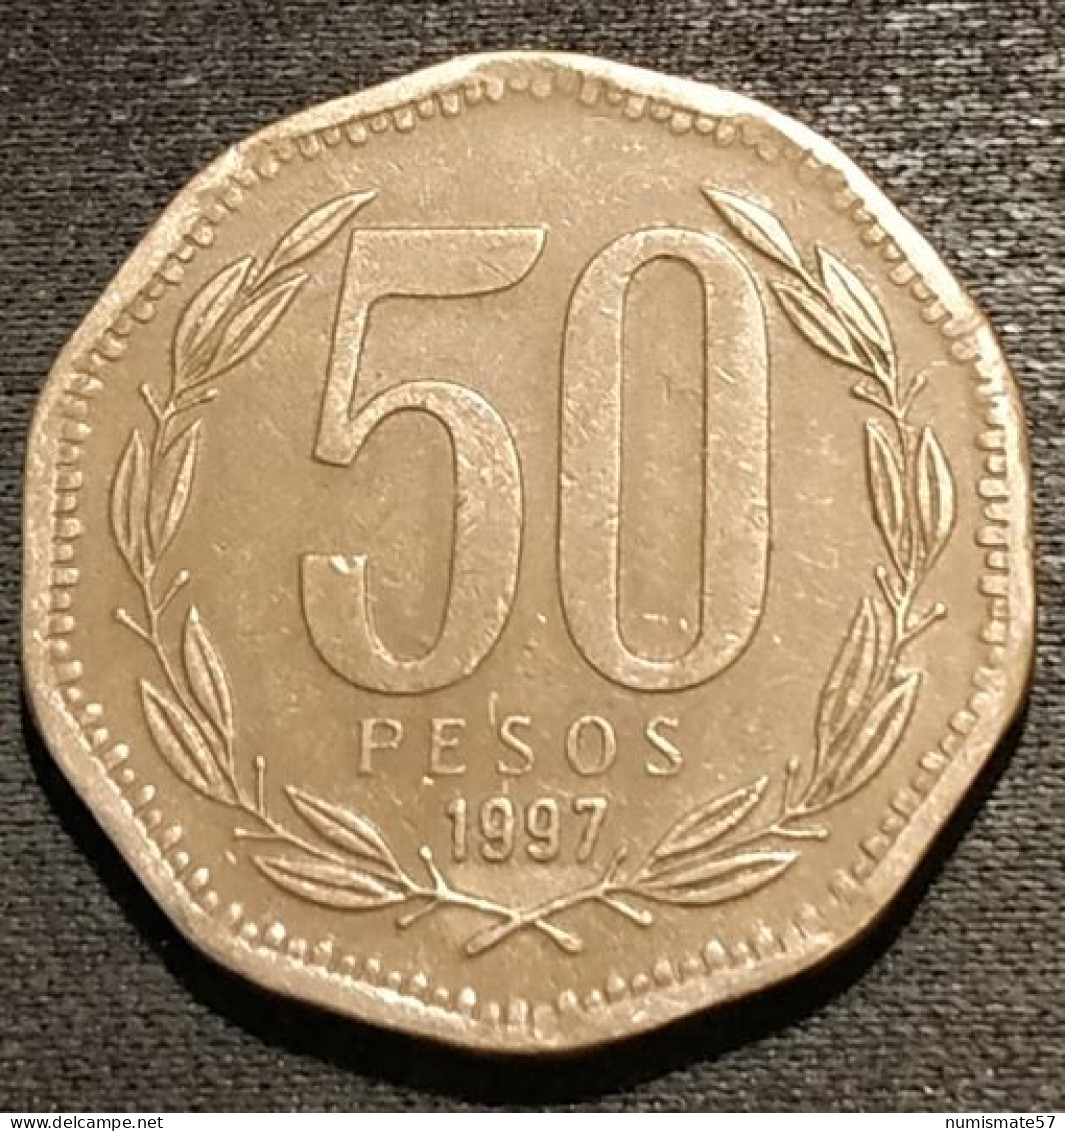 CHILI - CHILE - 50 PESOS 1997 - Bernardo O'Higgins Riquelme - KM 219.2 - ( Bronze-aluminium ) - Chili